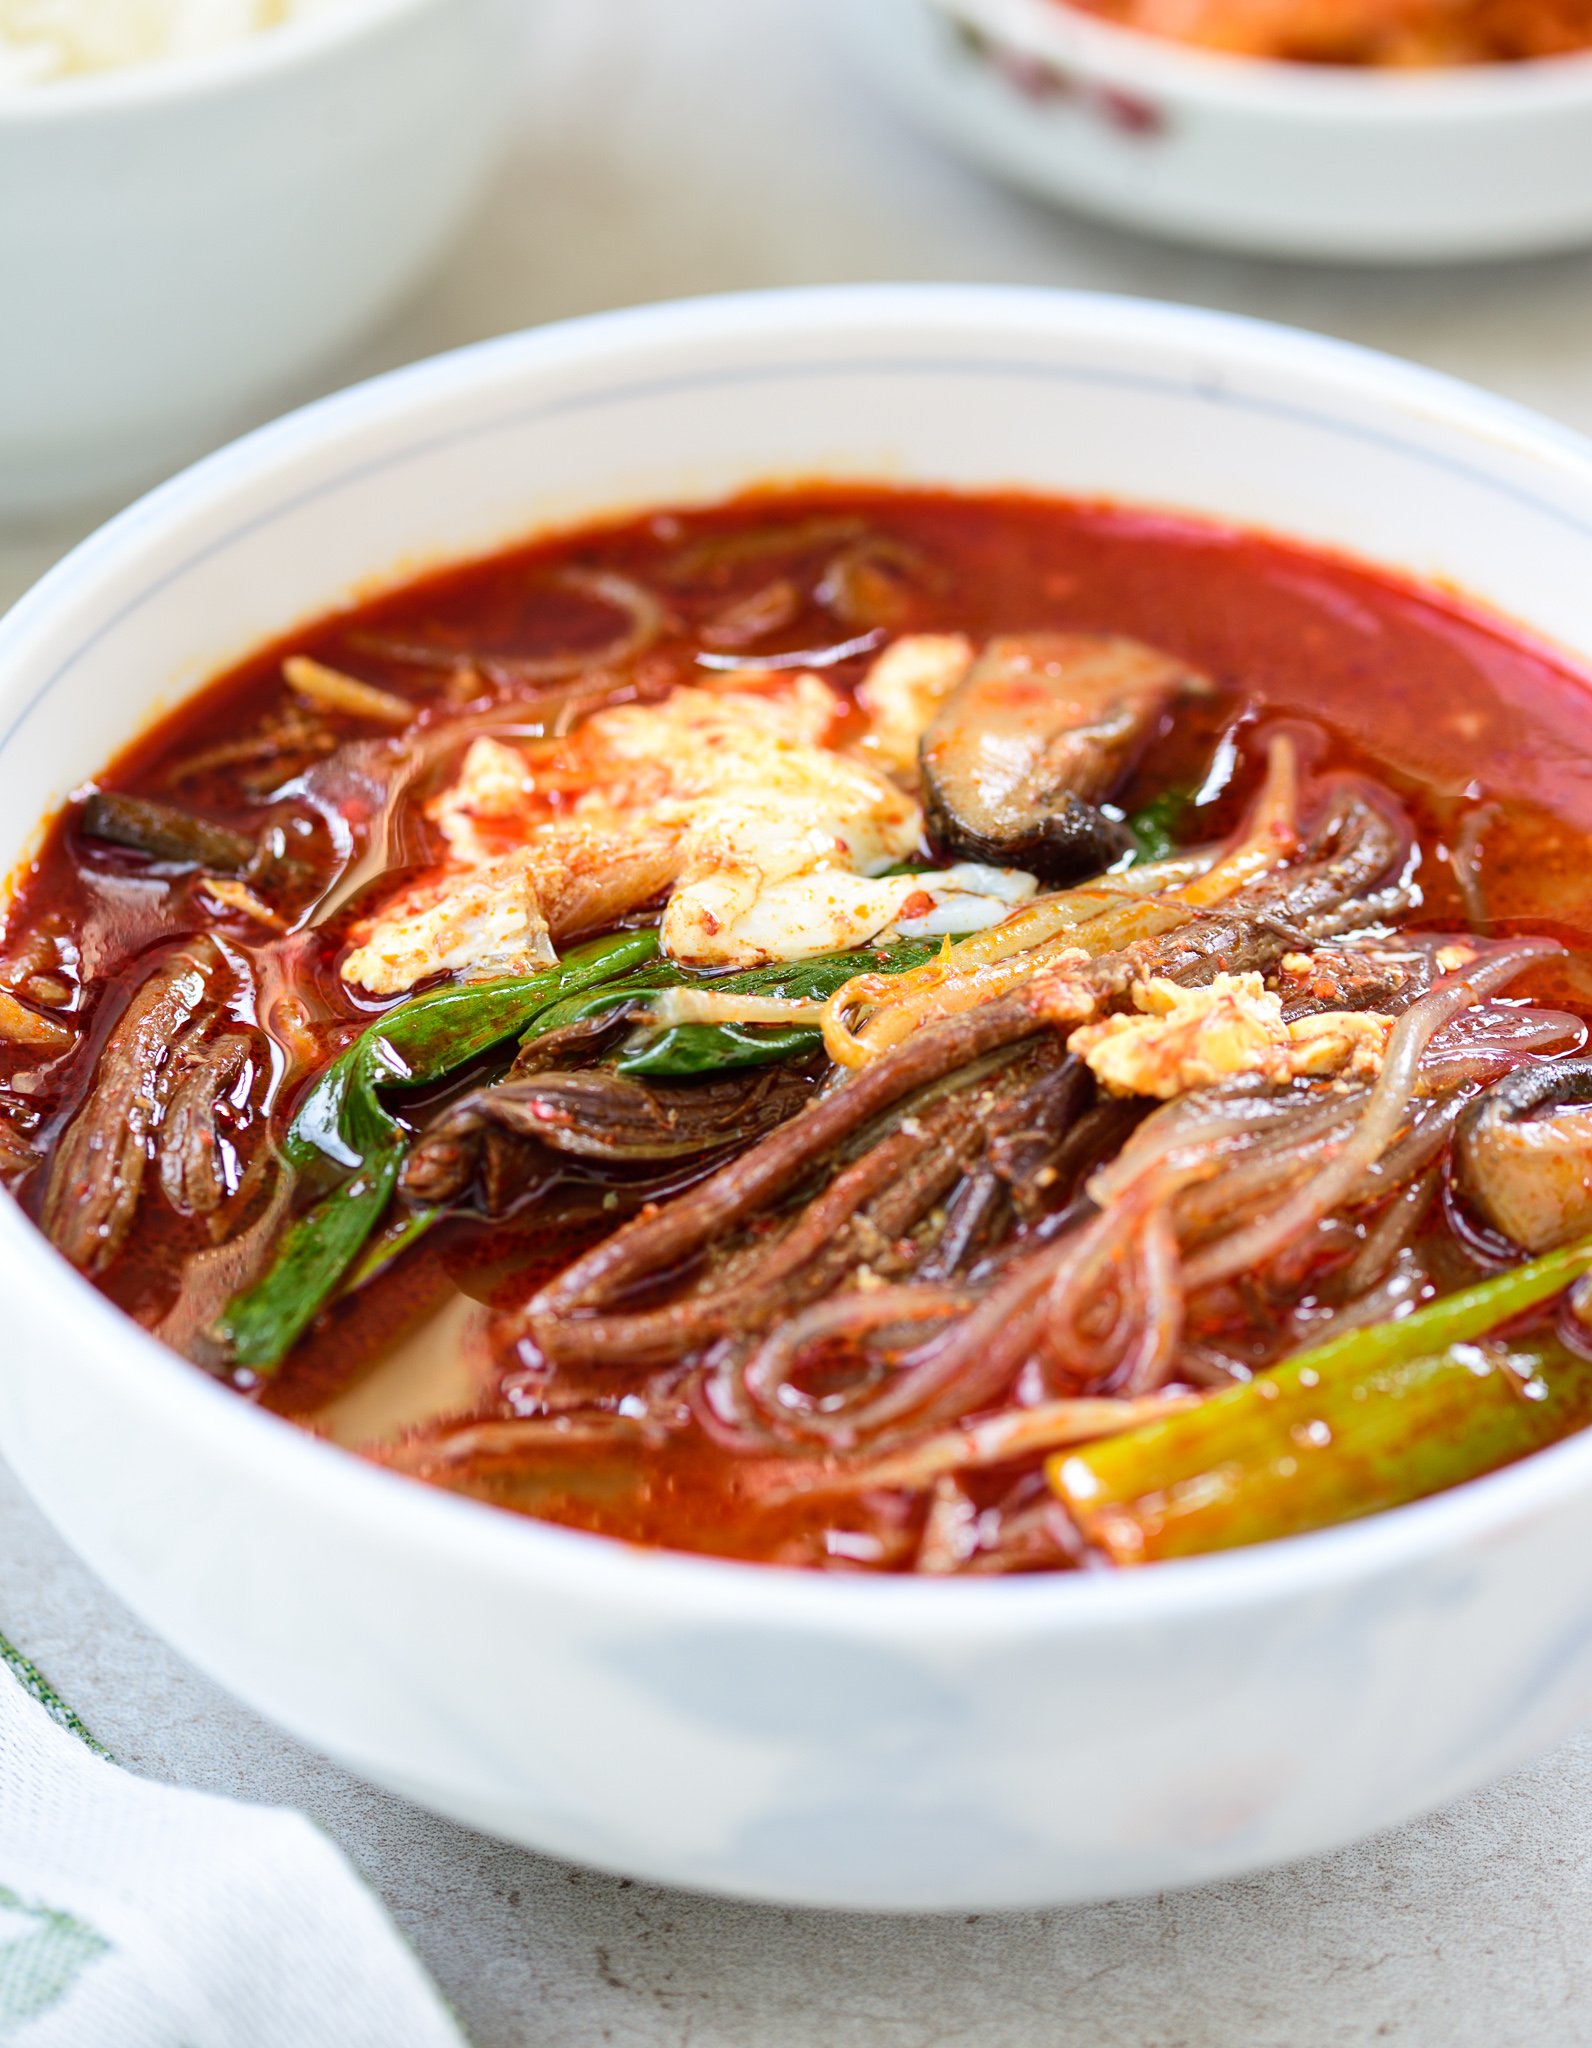 Yukgaejang (Spicy Beef Soup with Vegetables) - Korean Bapsang